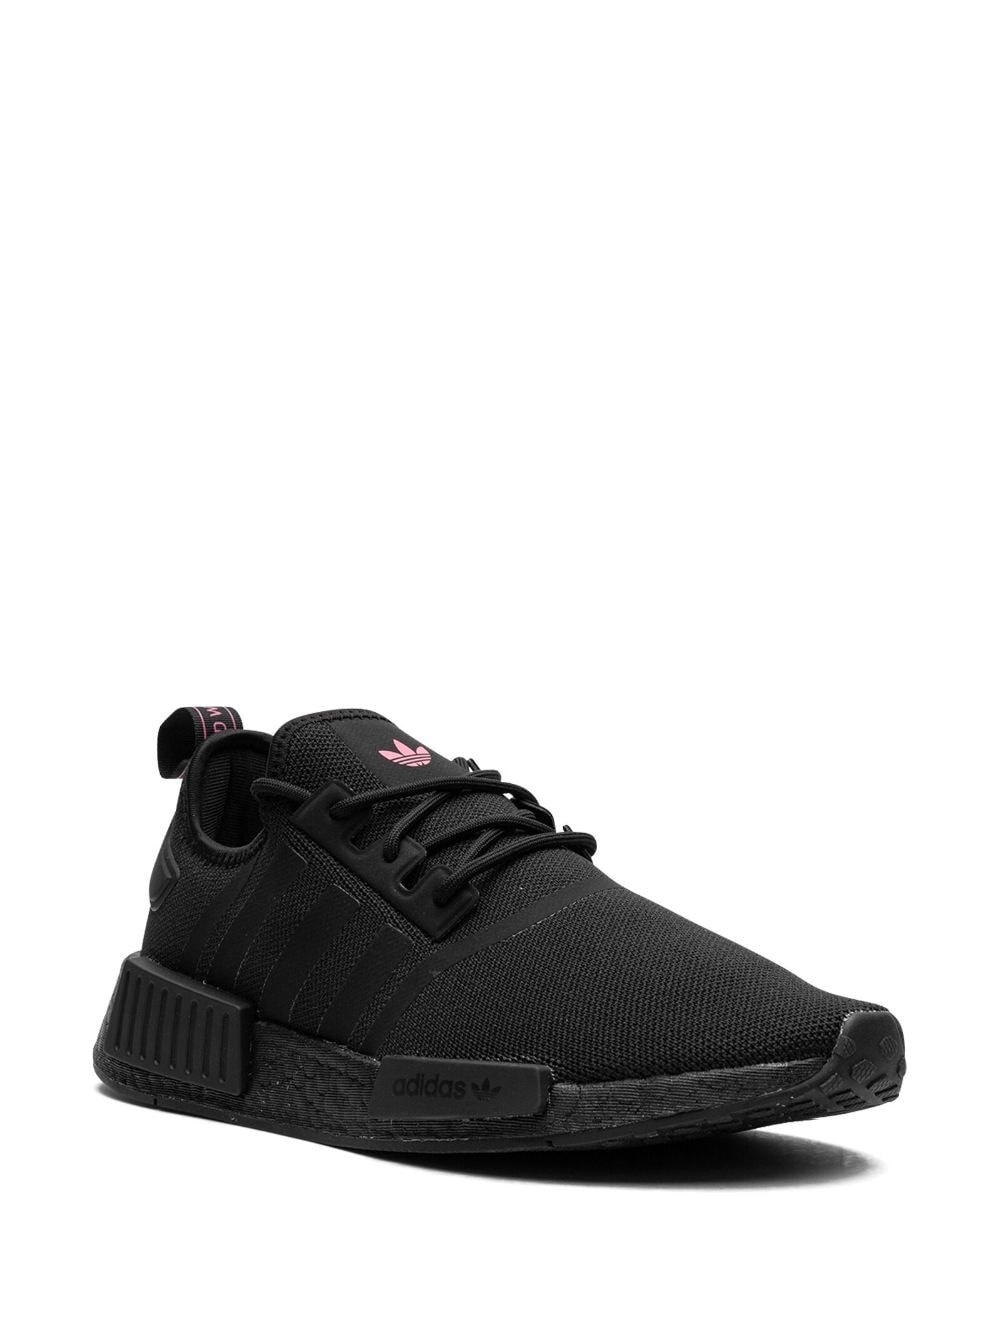 NMD_R1 "Black/Solar Pink" sneakers - 2